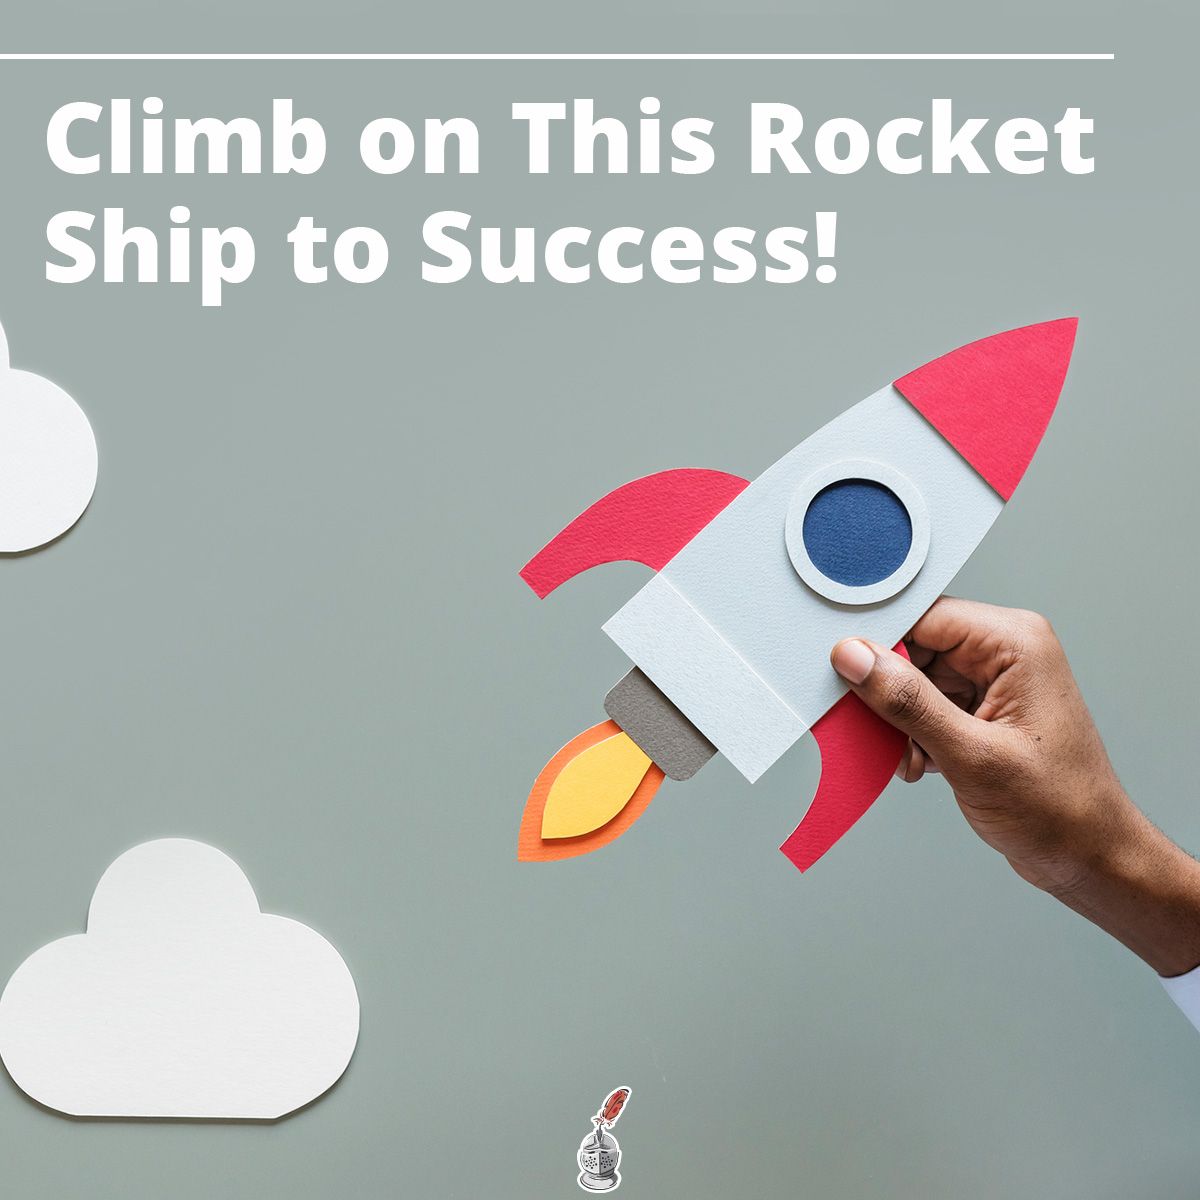 Climb on This Rocket Ship to Success!